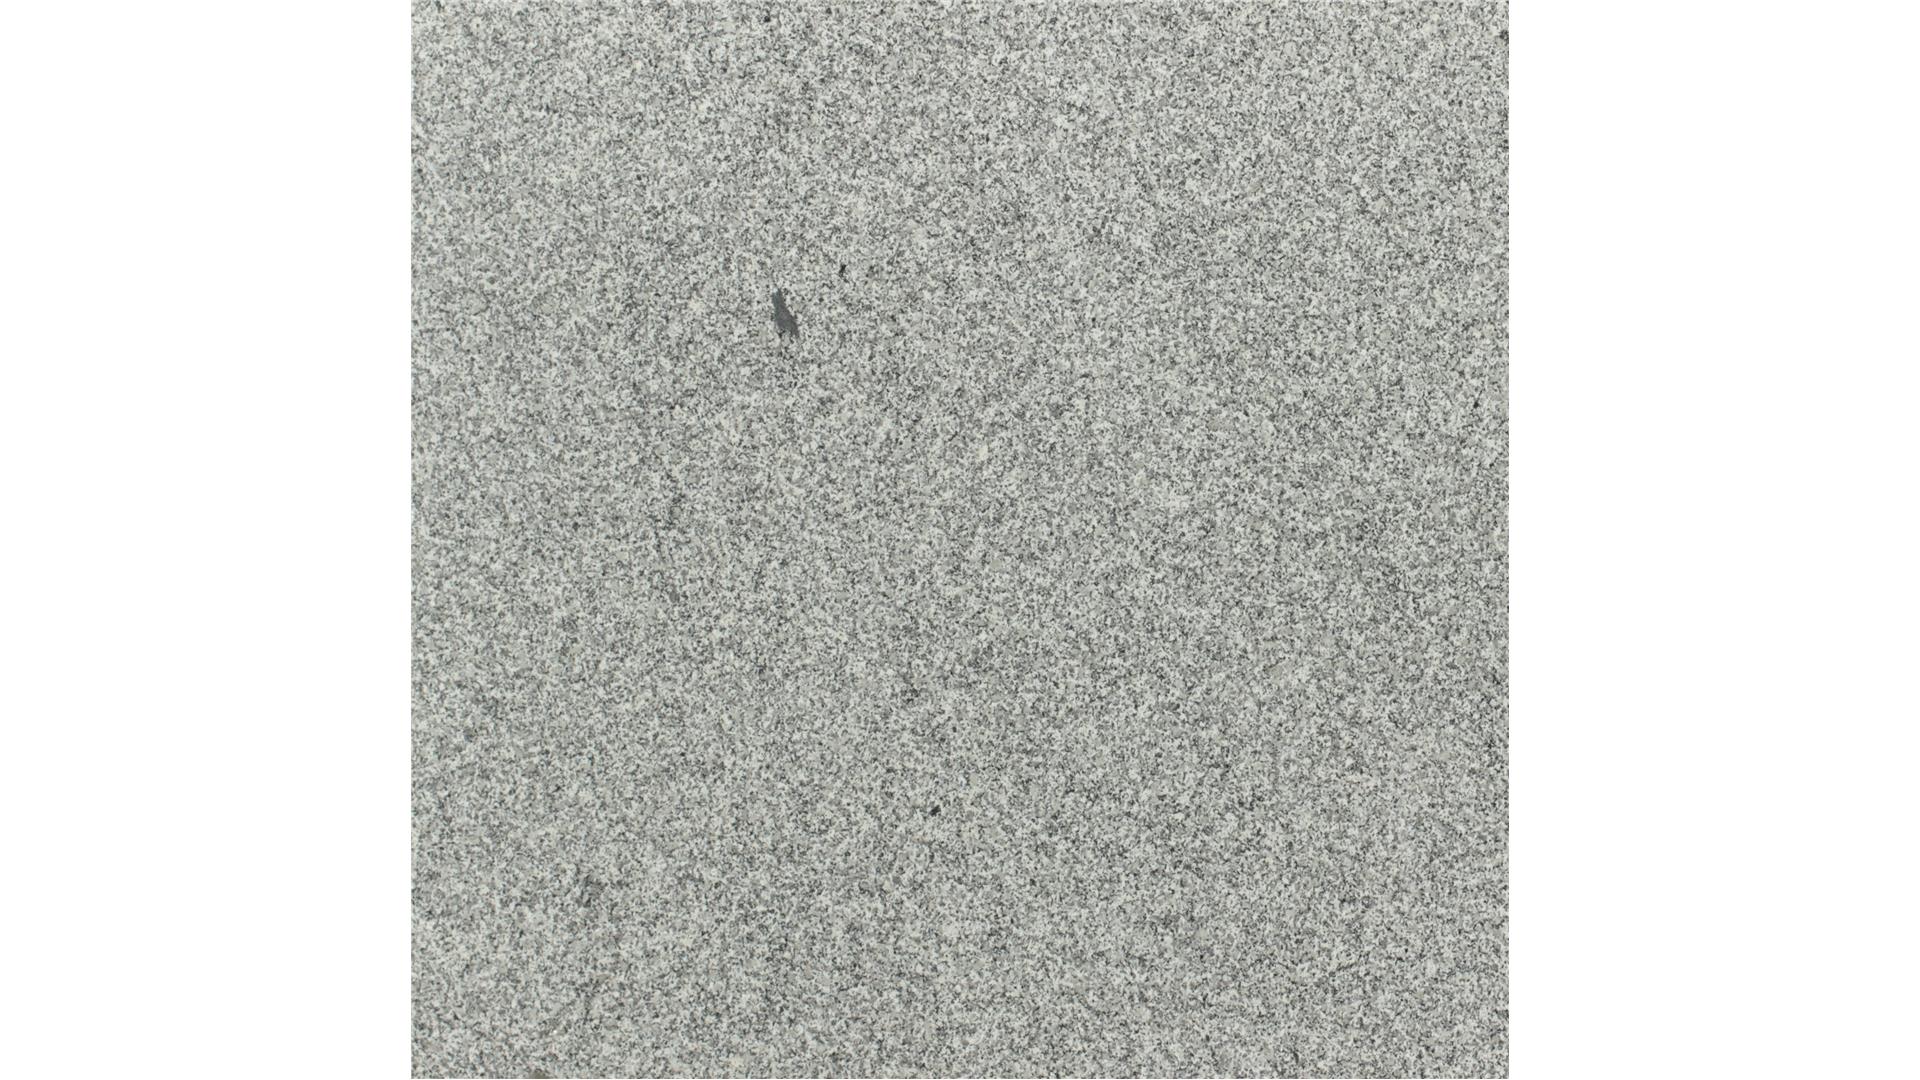 Luna Pearl 3 cm MSI Natural Stone Slabs